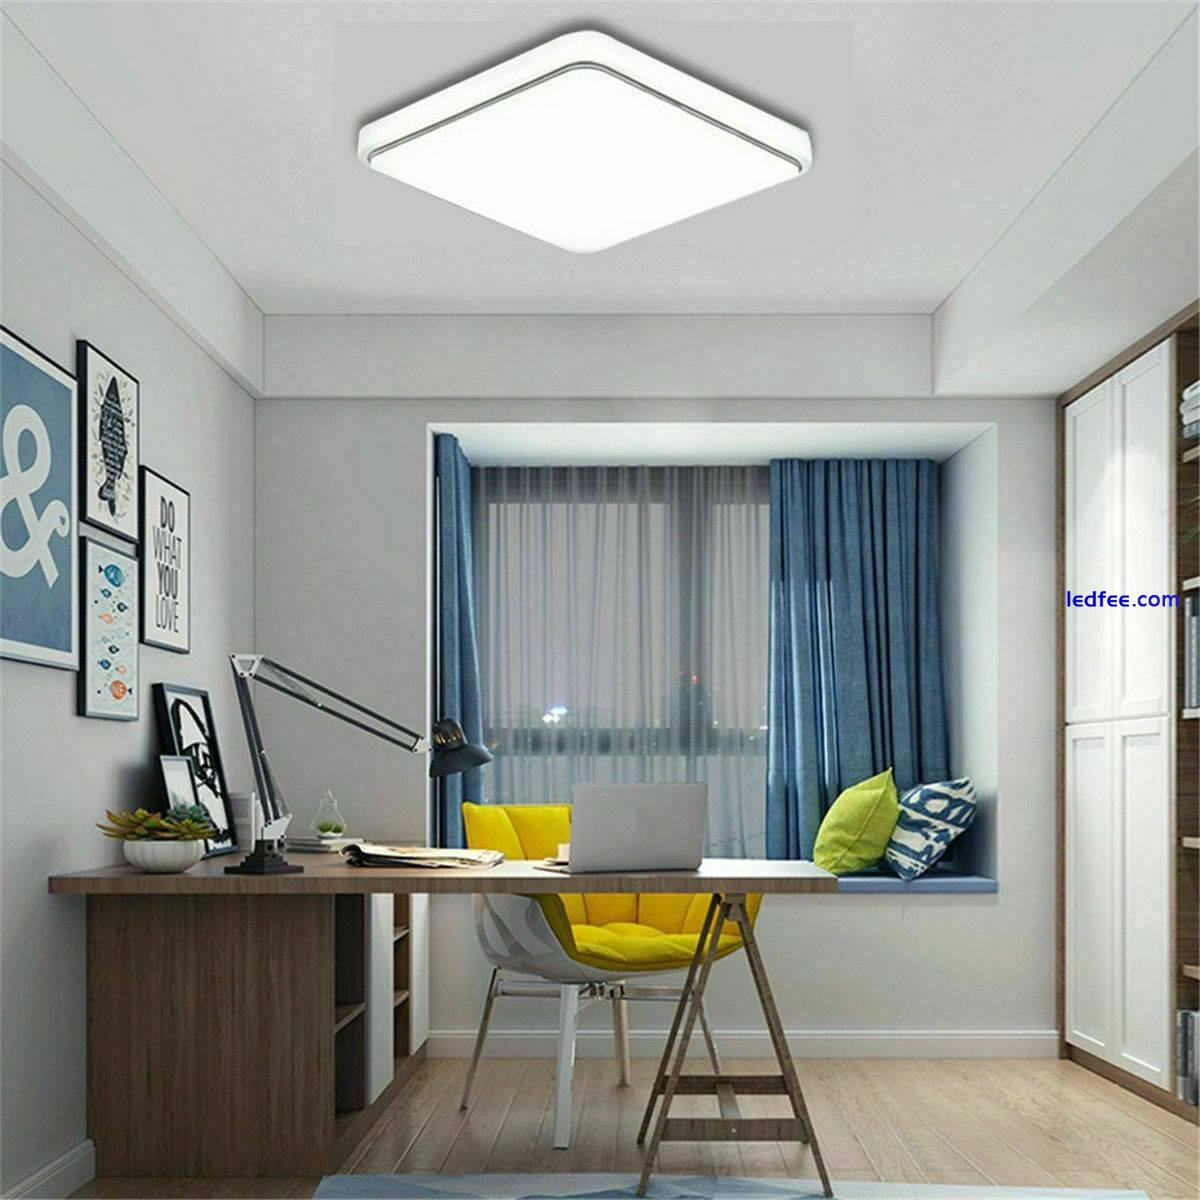 Modern LED Ceiling Light Square Panel Down Lights Bathroom Kitchen Bedroom Lamp 2 